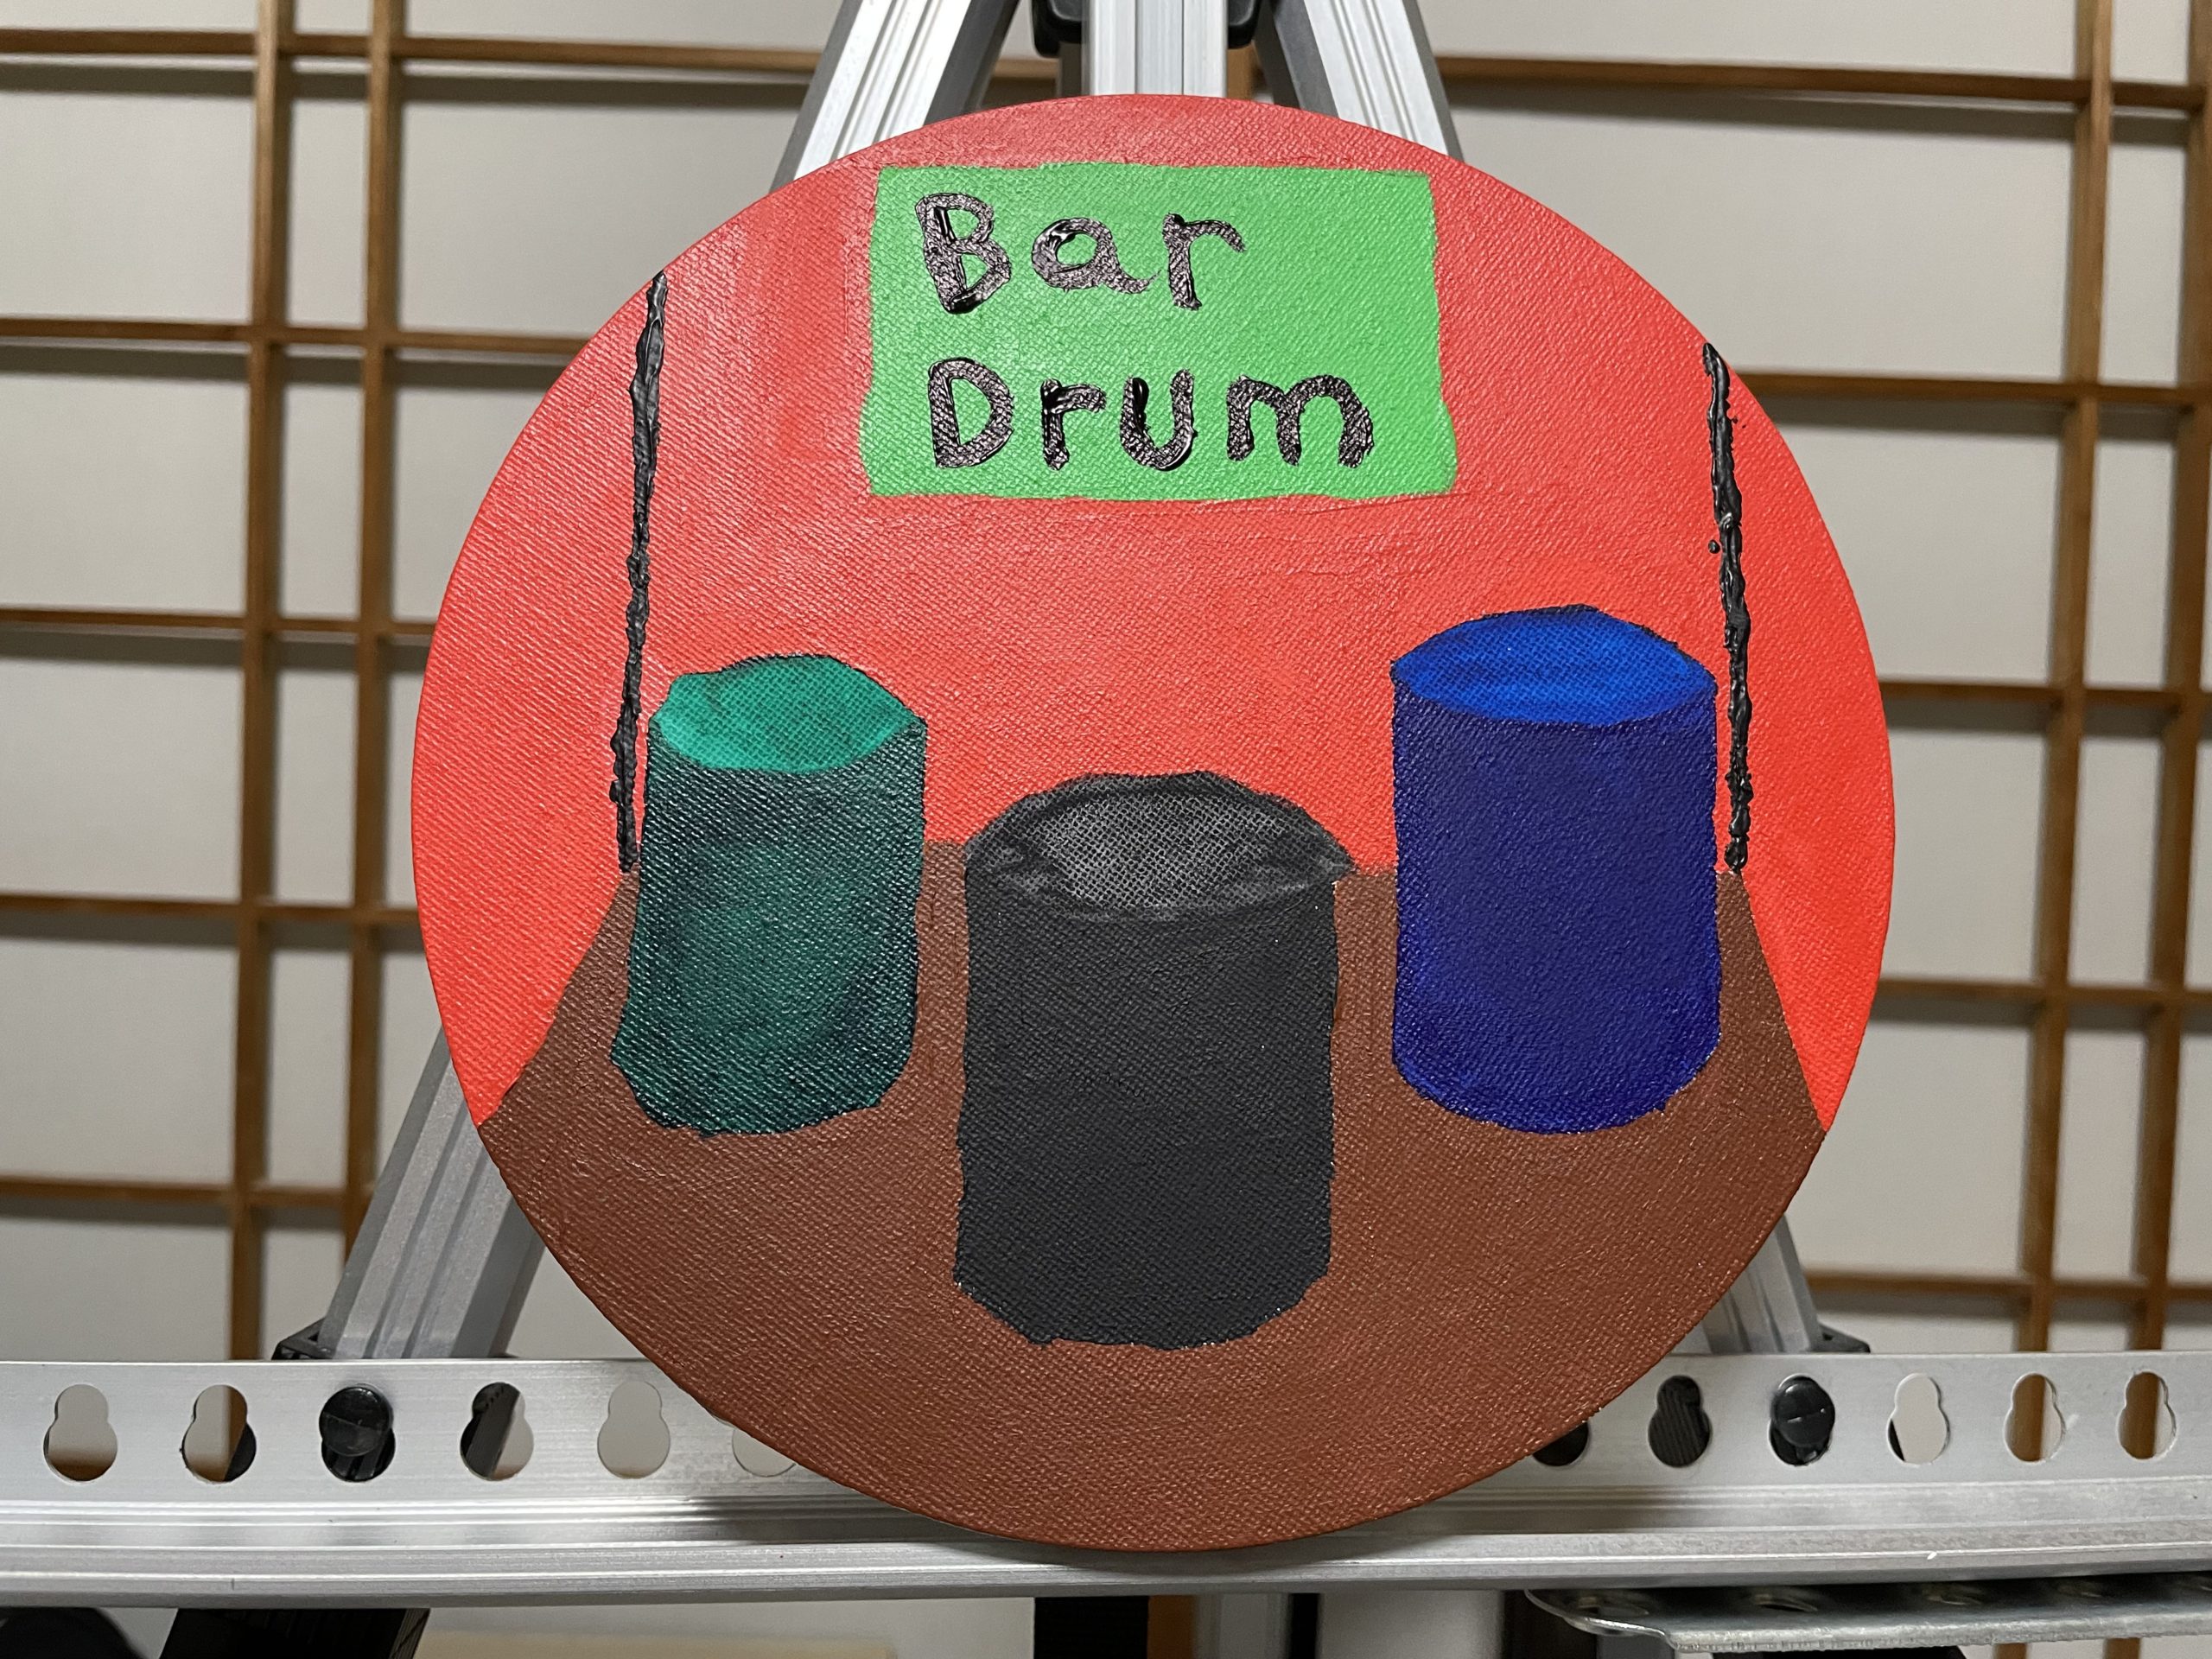 Bar Drum